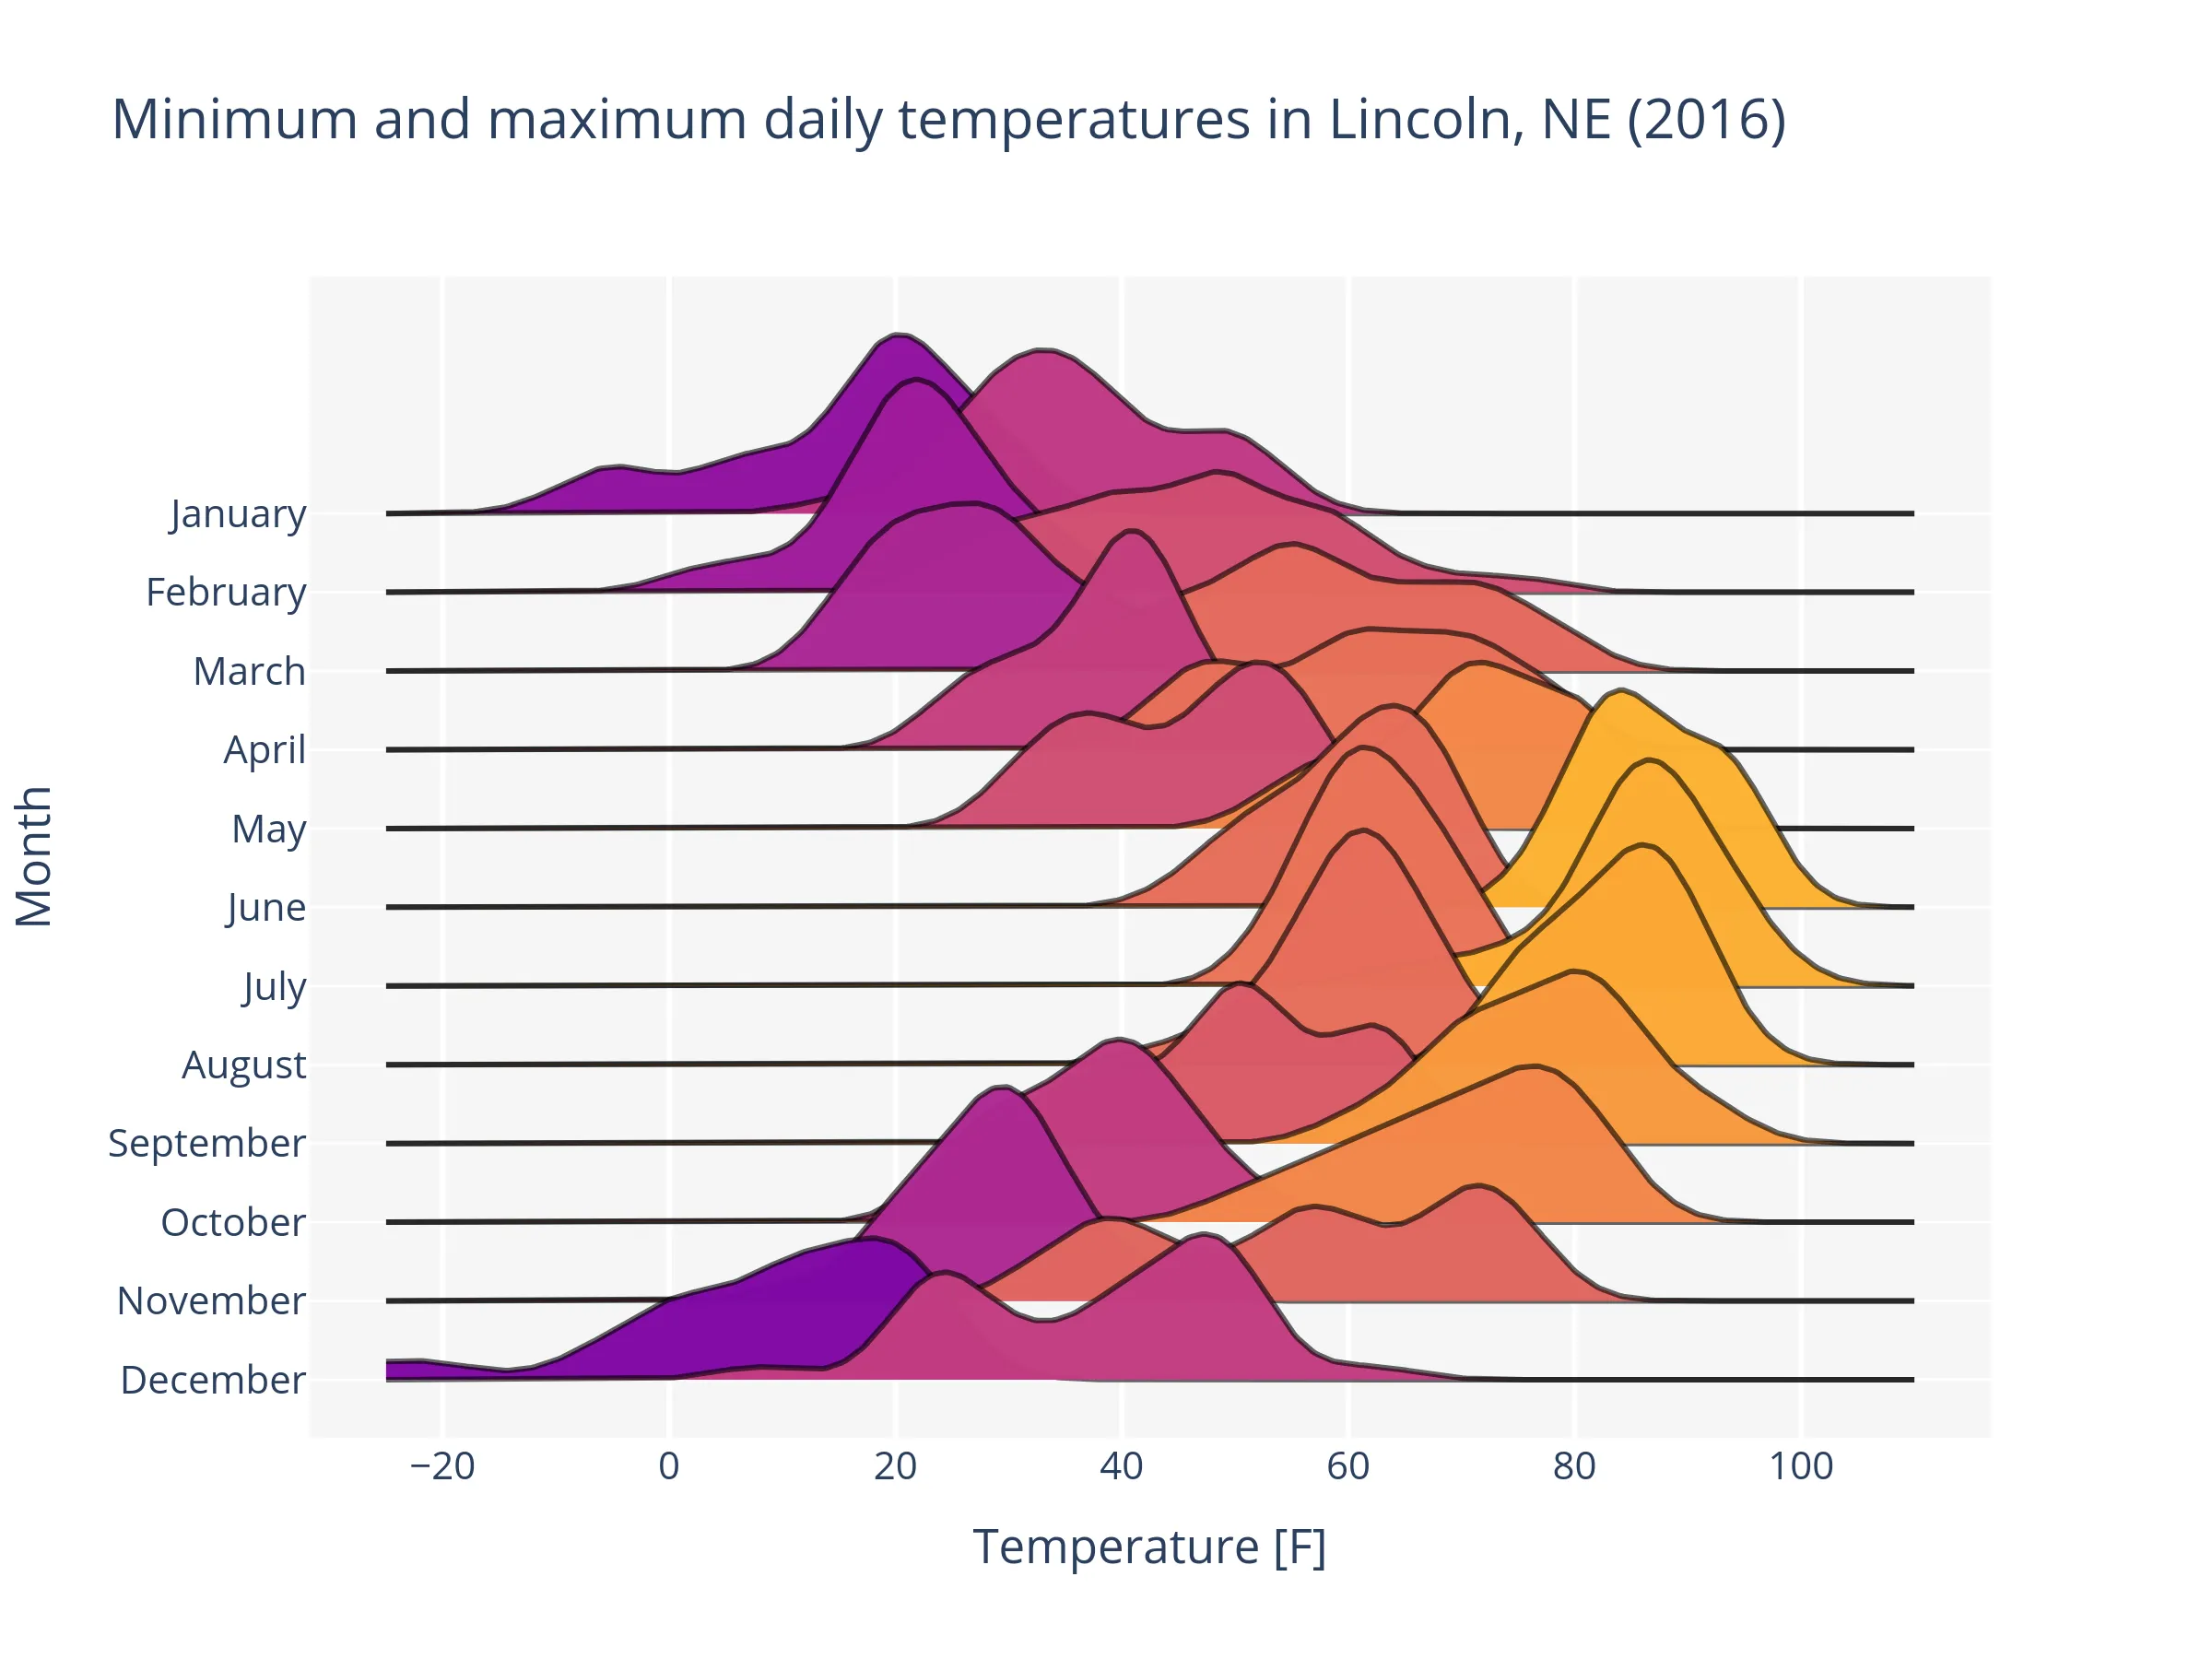 ridgeline plot of the Lincoln weather dataset using the ridgeplot Python library